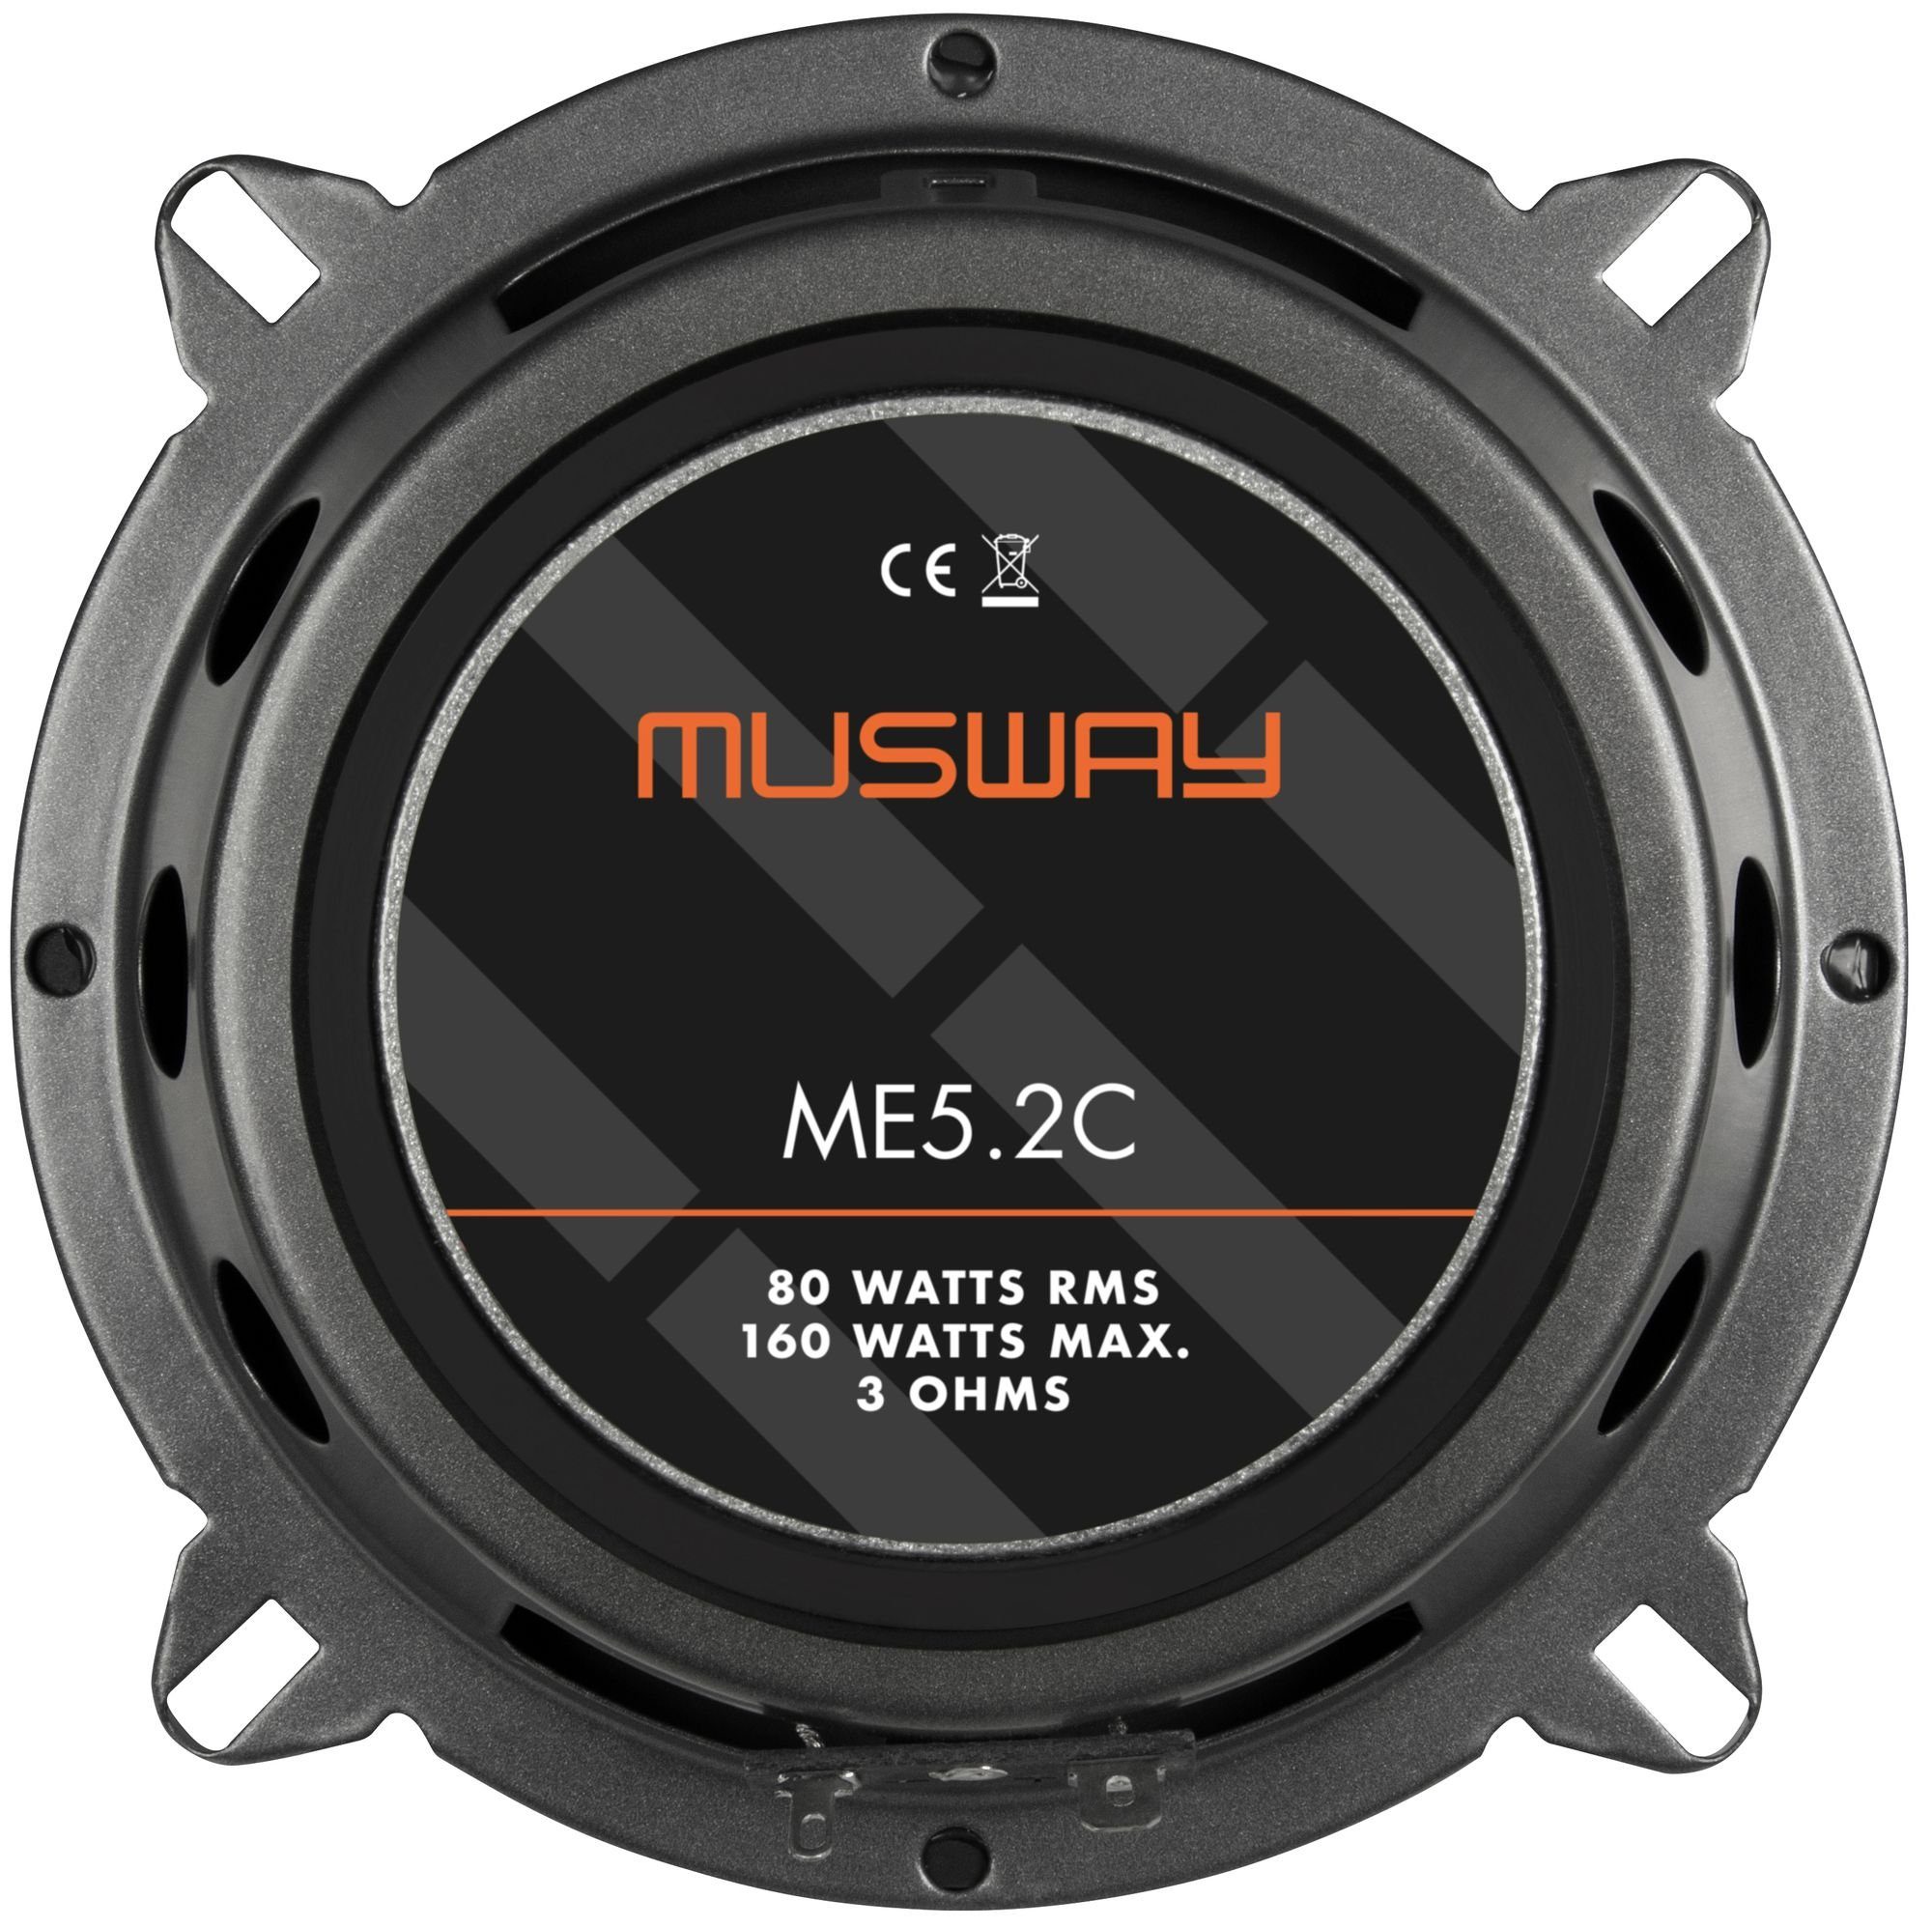 Musway Auto-Lautsprecher Lautsprecher System ME5.2C (Musway Lautsprecher 13cm 13cm - System) ME5.2C Musway -